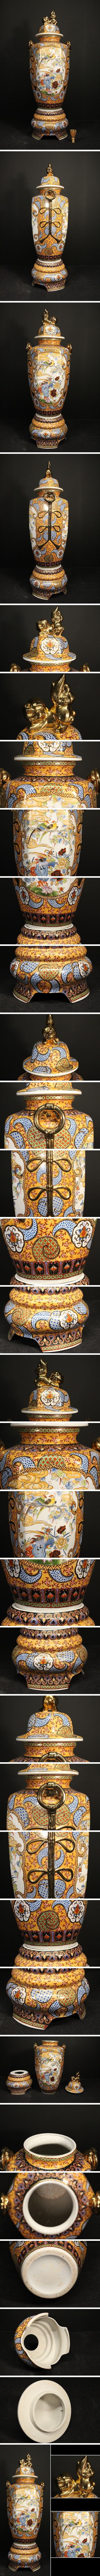 森 恵子 色絵 椿文 30cm 大鉢 1,990～2,000年の個展で購入陶芸作品 - 陶芸